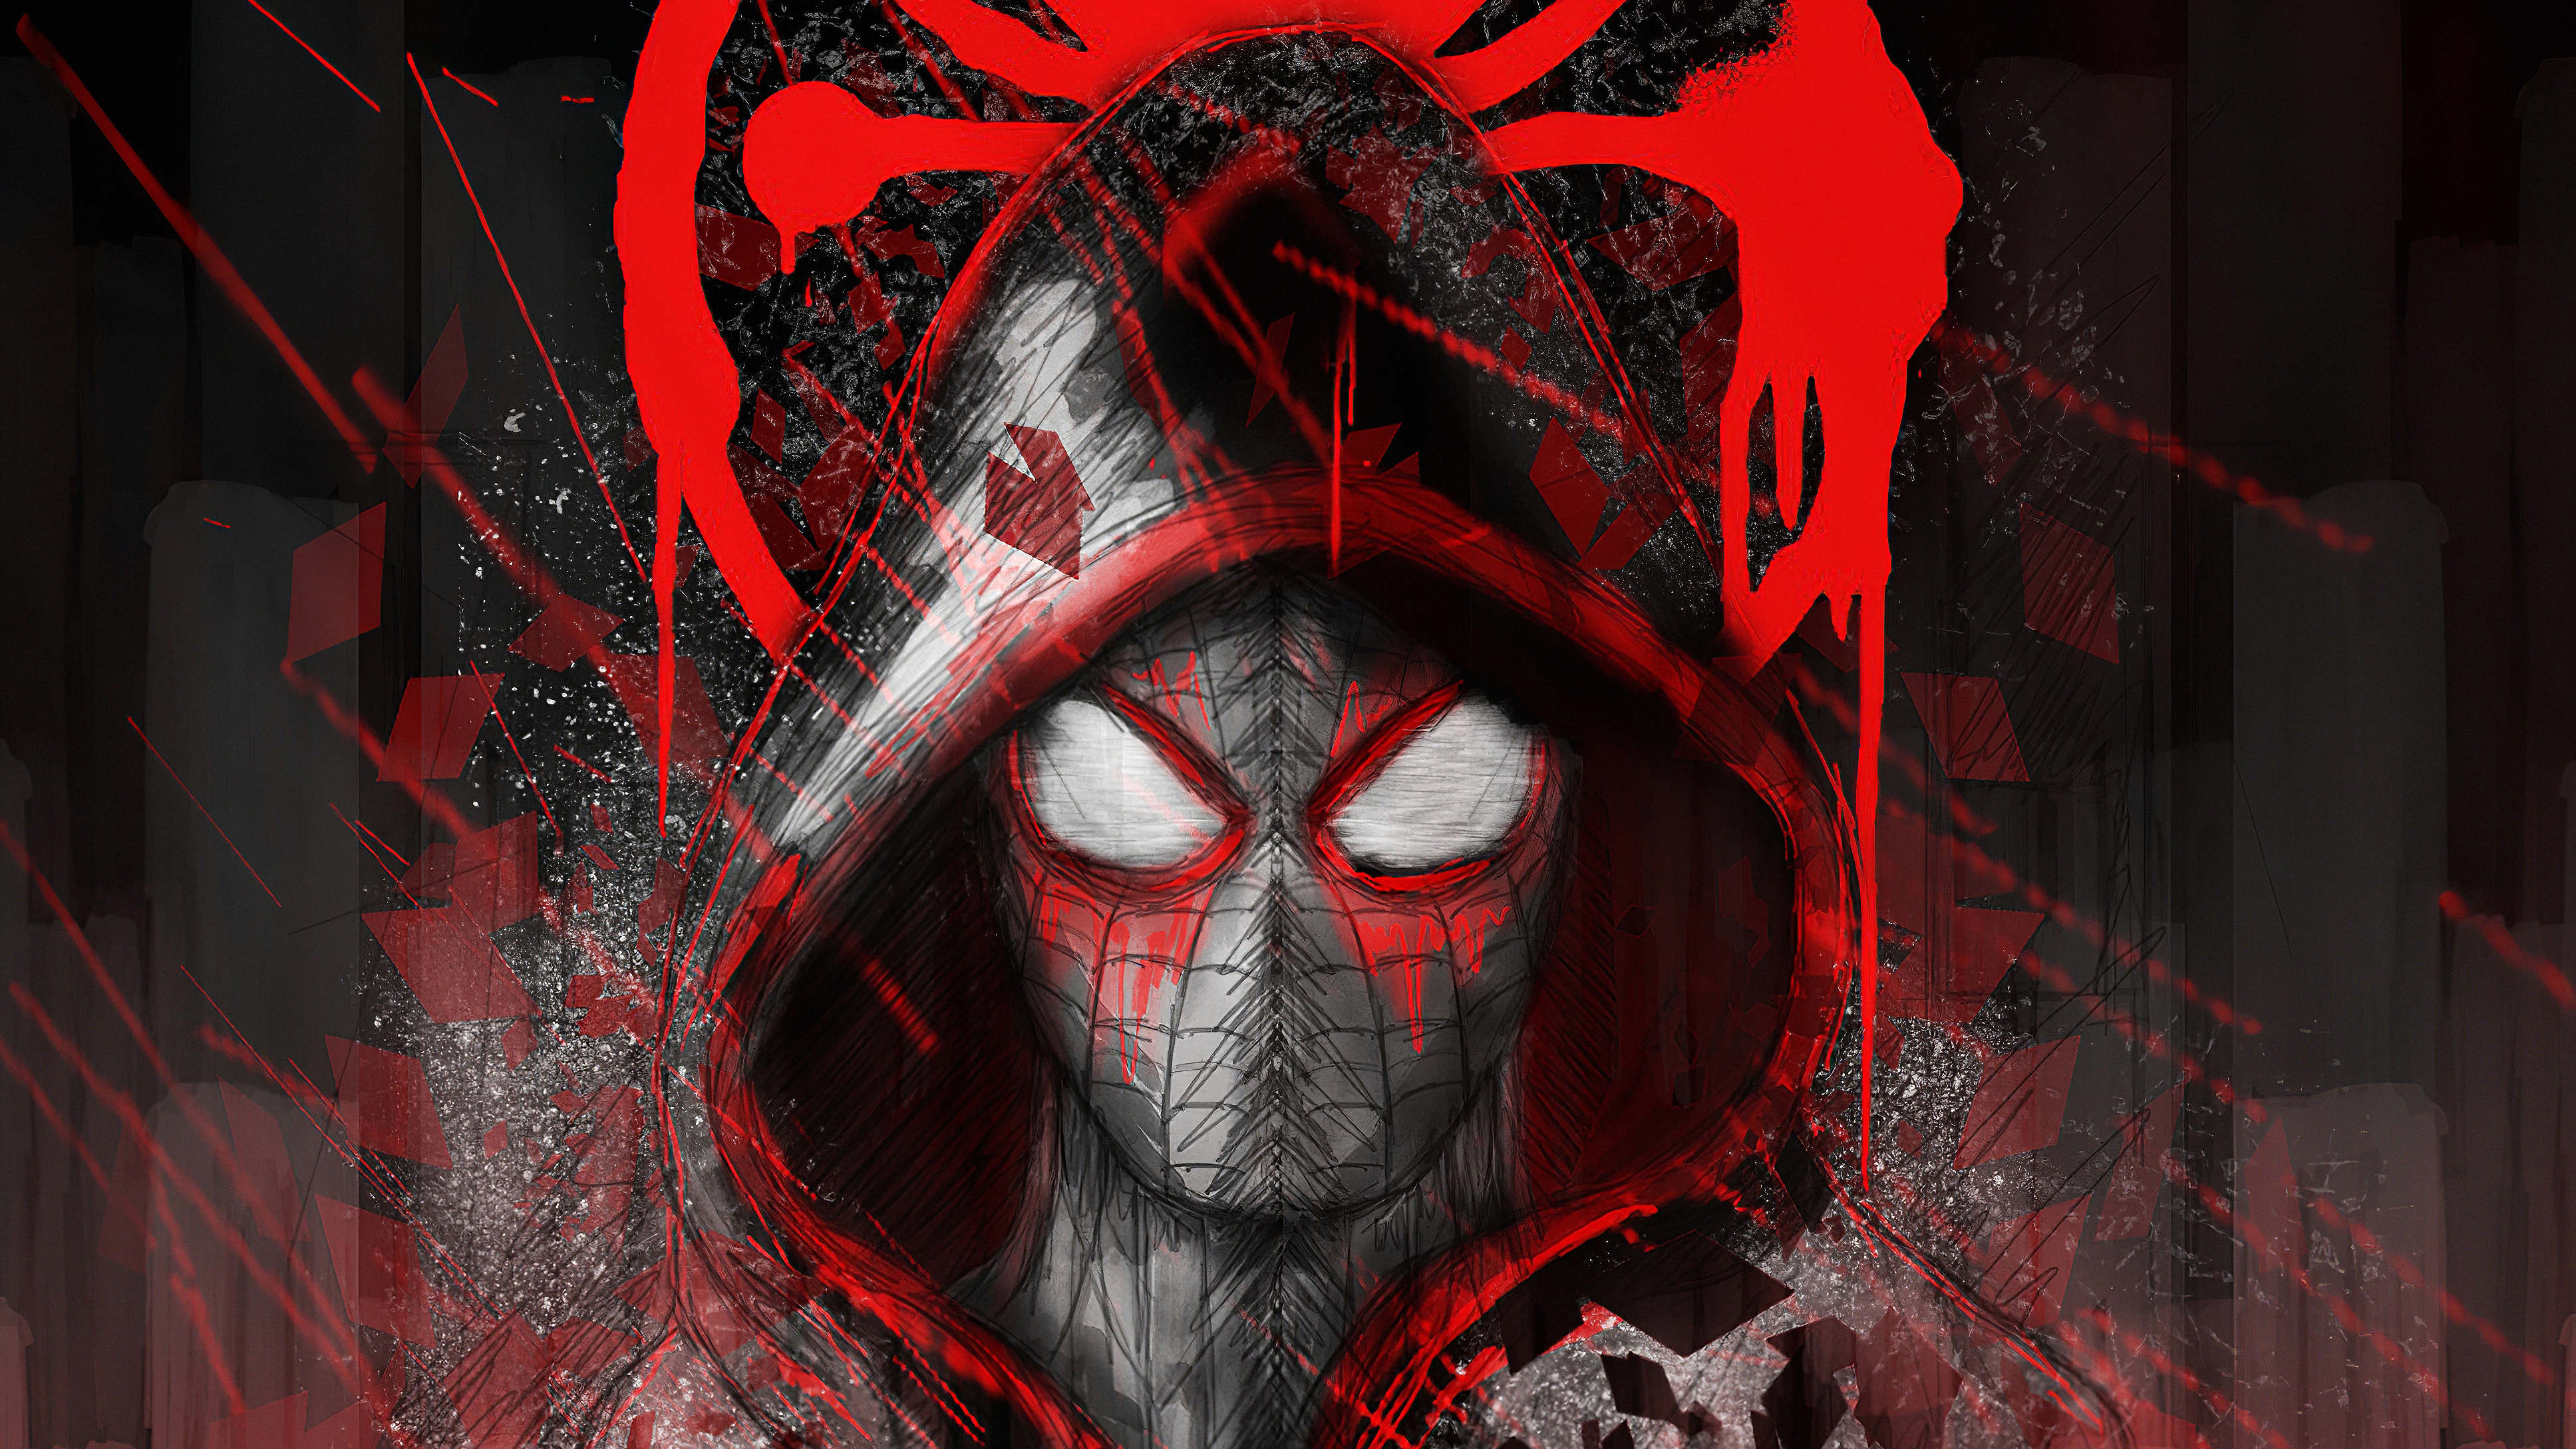 Spider-Man 4k Ultra HD Wallpaper by ChrisNazgul